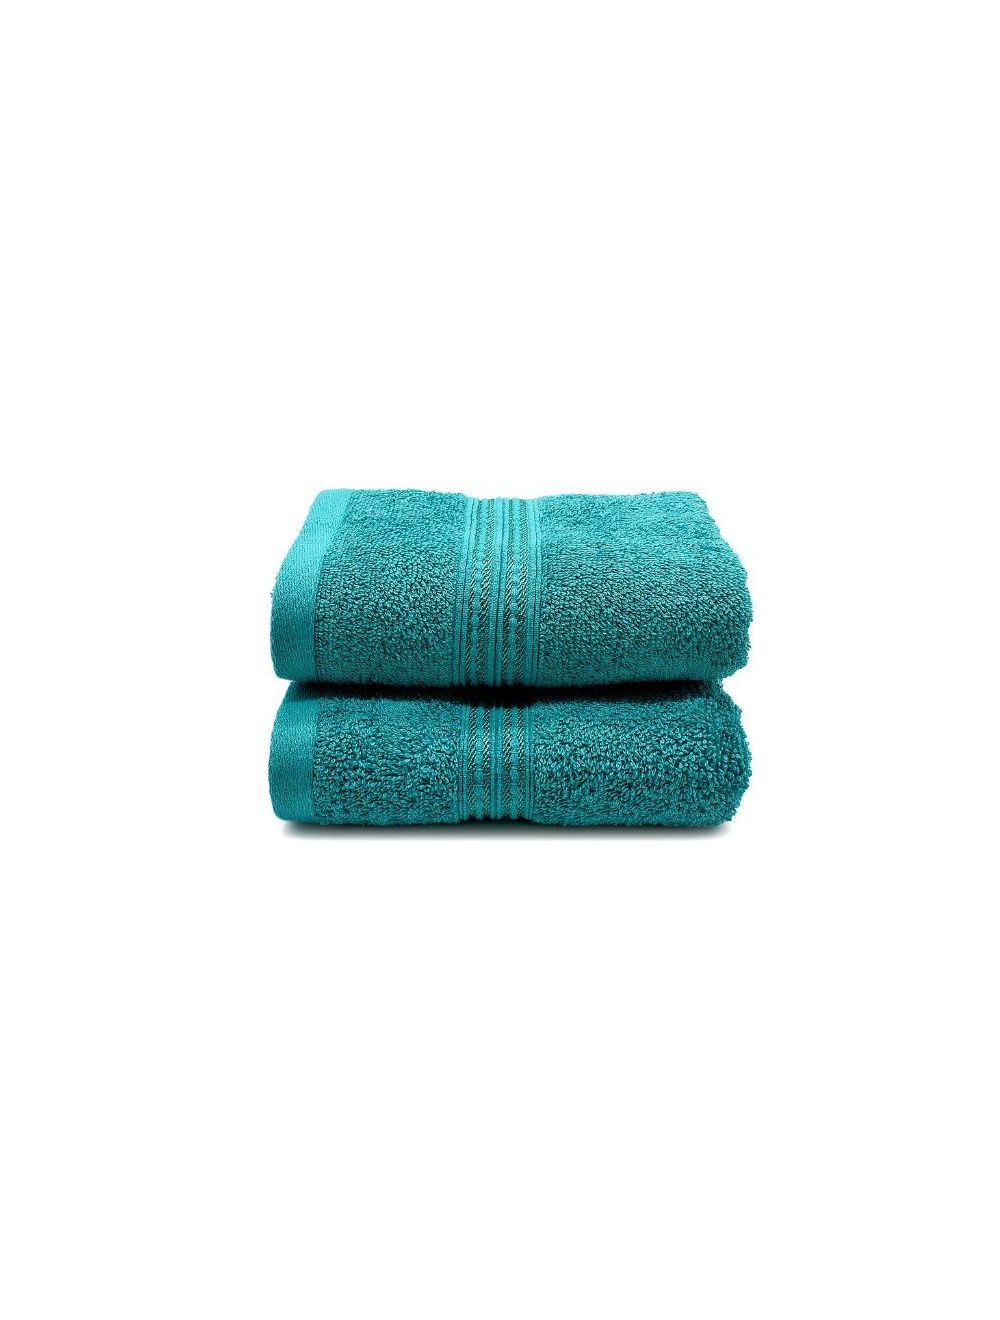 Rahalife 100% Cotton 2-Piece Hand Towel Set, Classic Collection, Sky Blue-14RLHT022